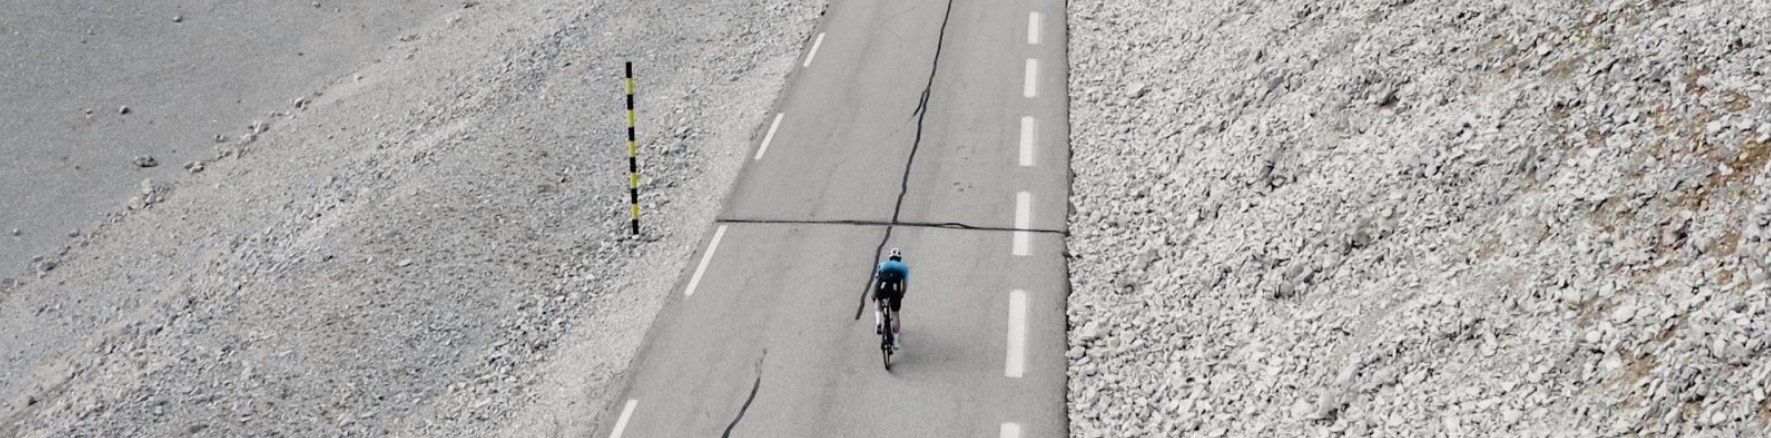 ASSOS of Switzerland B&W road cyclist